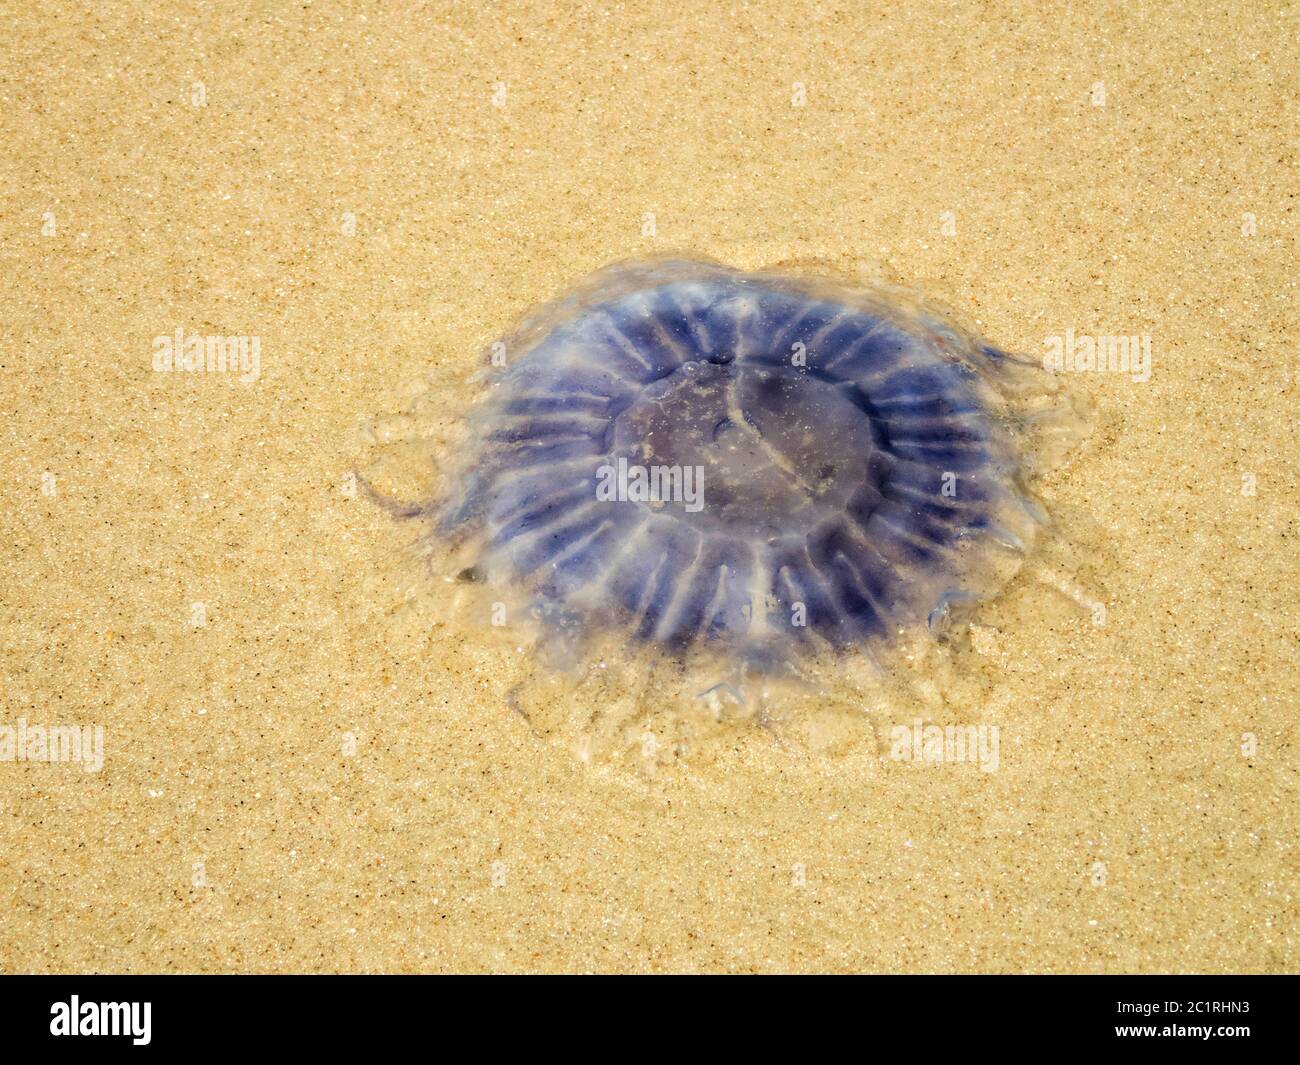 Germany, Wangerooge - Jellyfish Stock Photo